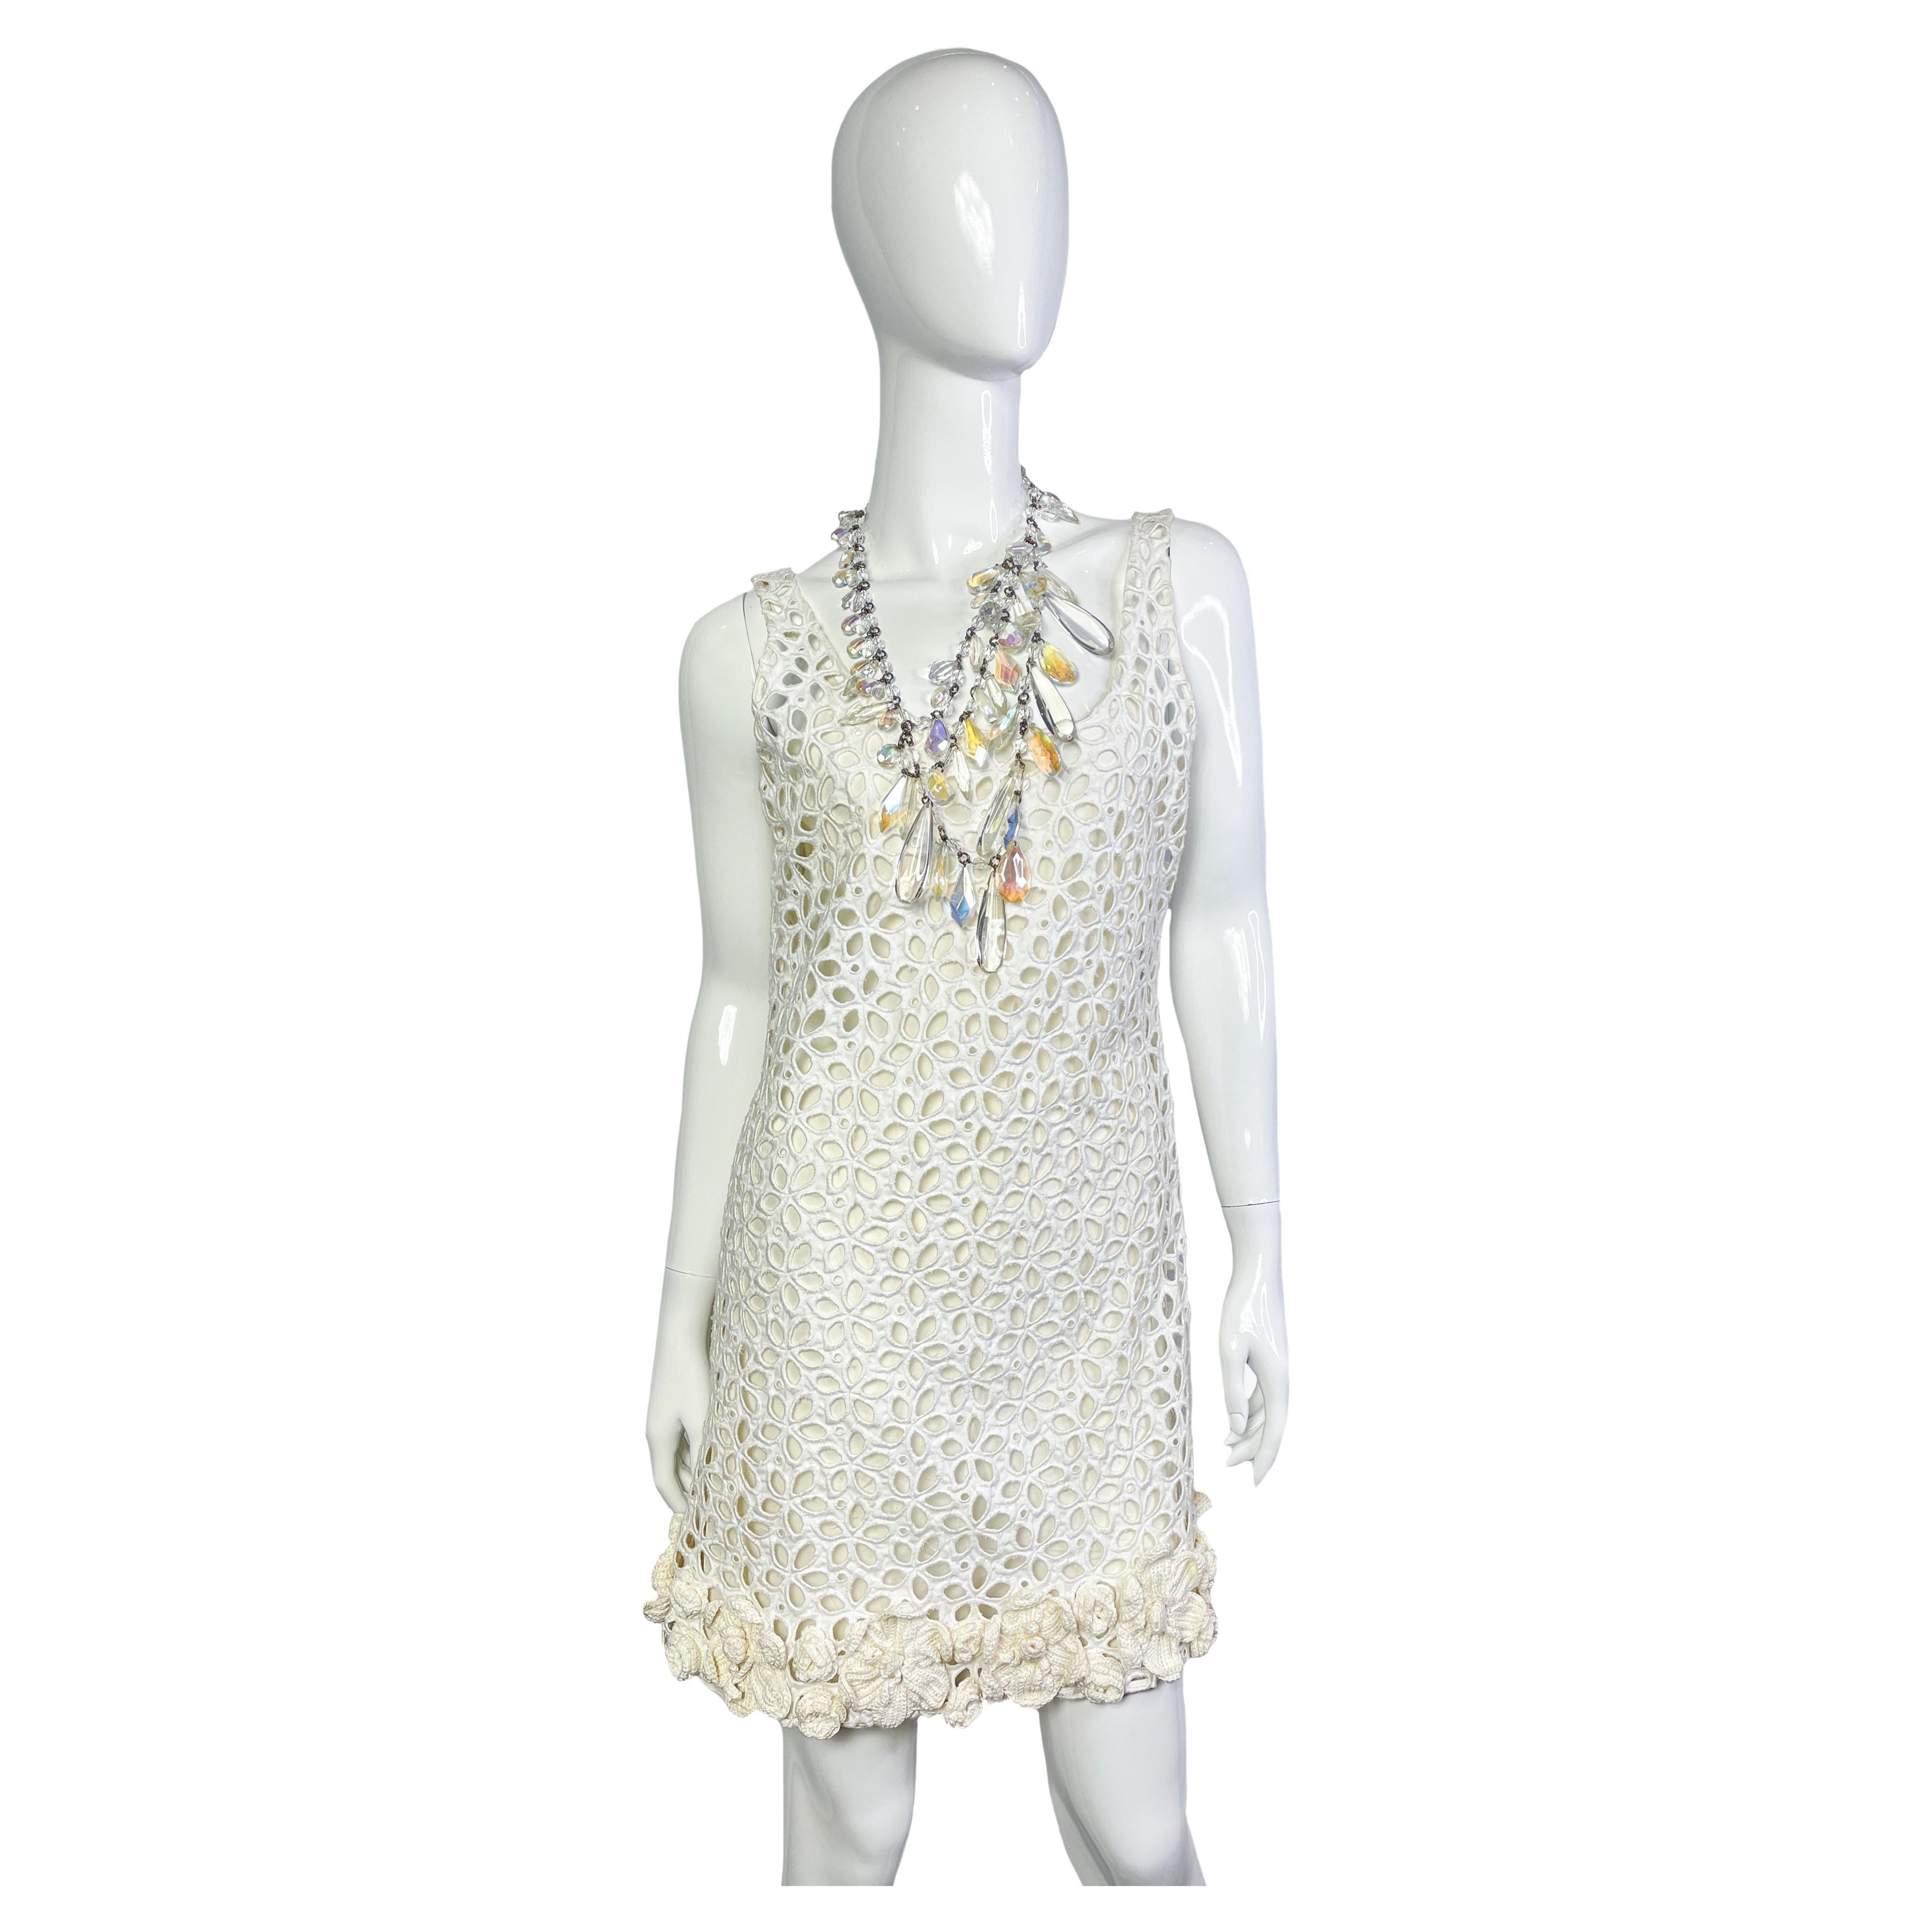 Mini robe en crochet Off-White avec collier en cristal, Prada, 2014 